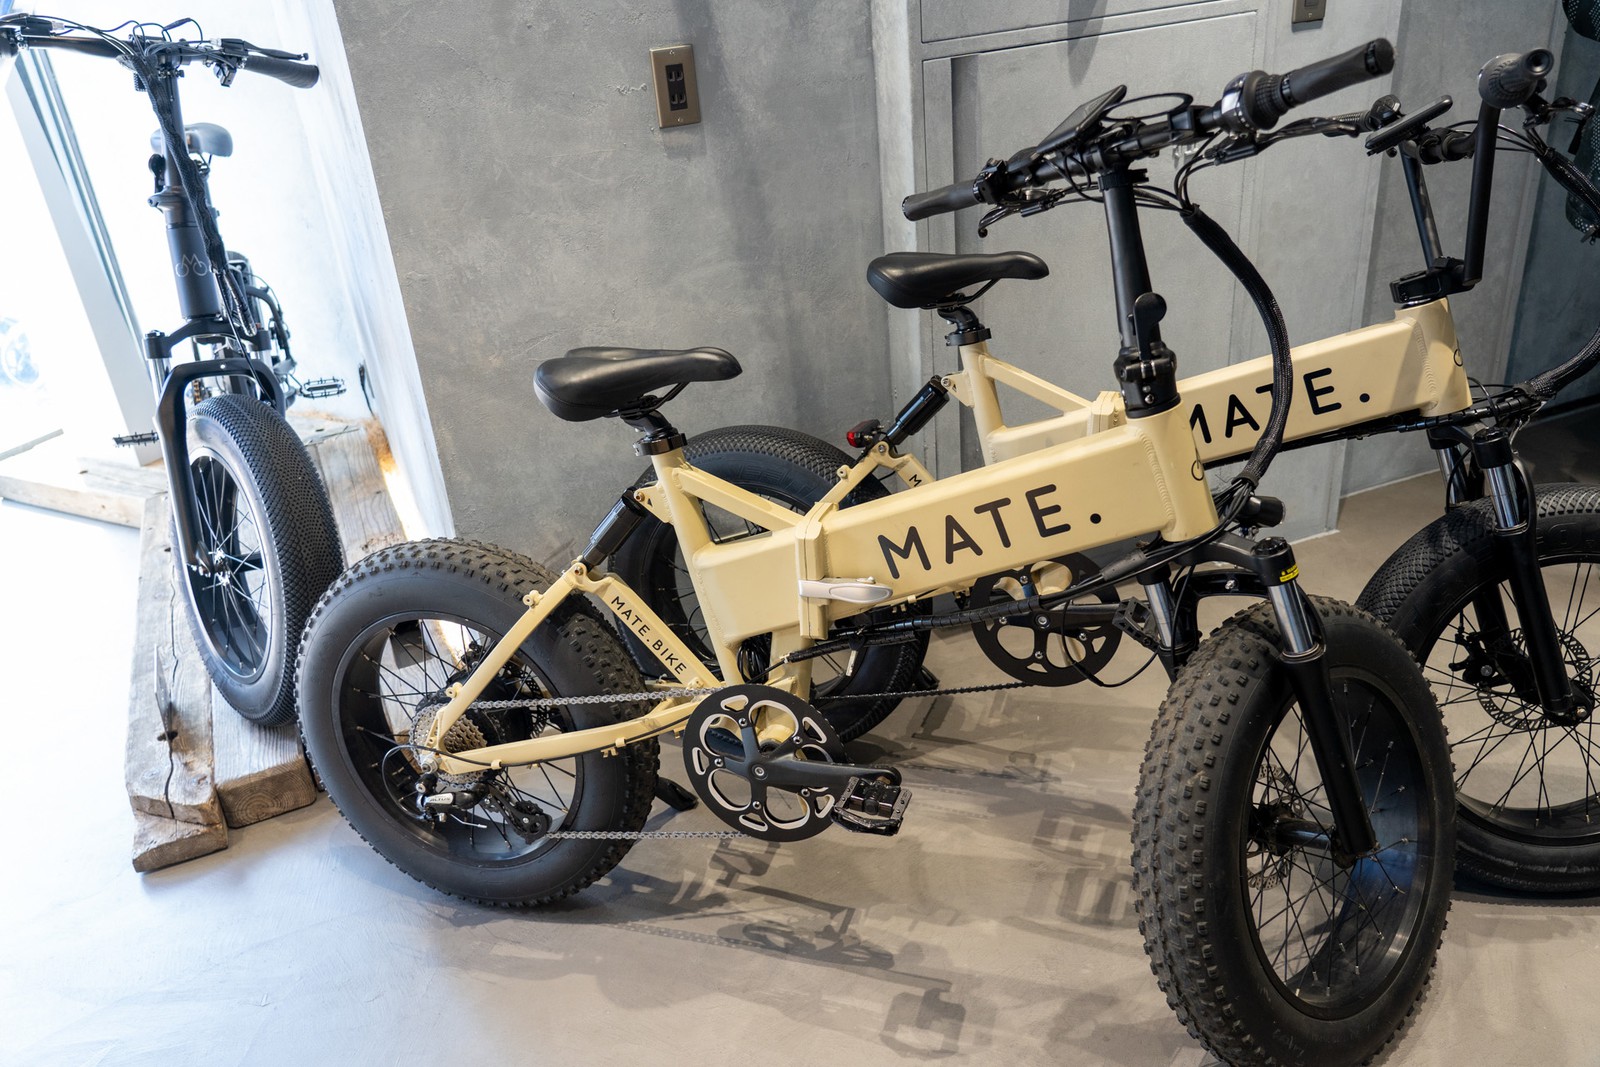 E-bike MATE X ファットバイク 電動アシスト自転車 マウンテンバ 